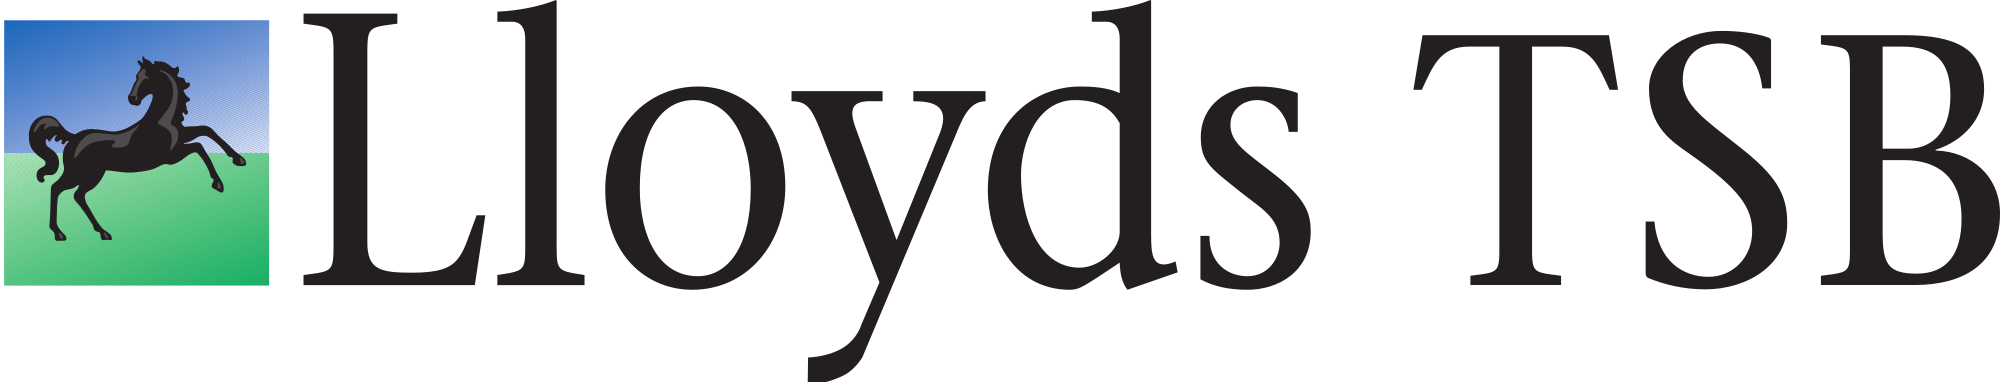 Lloyds TSB - Logopedia, the logo and branding site